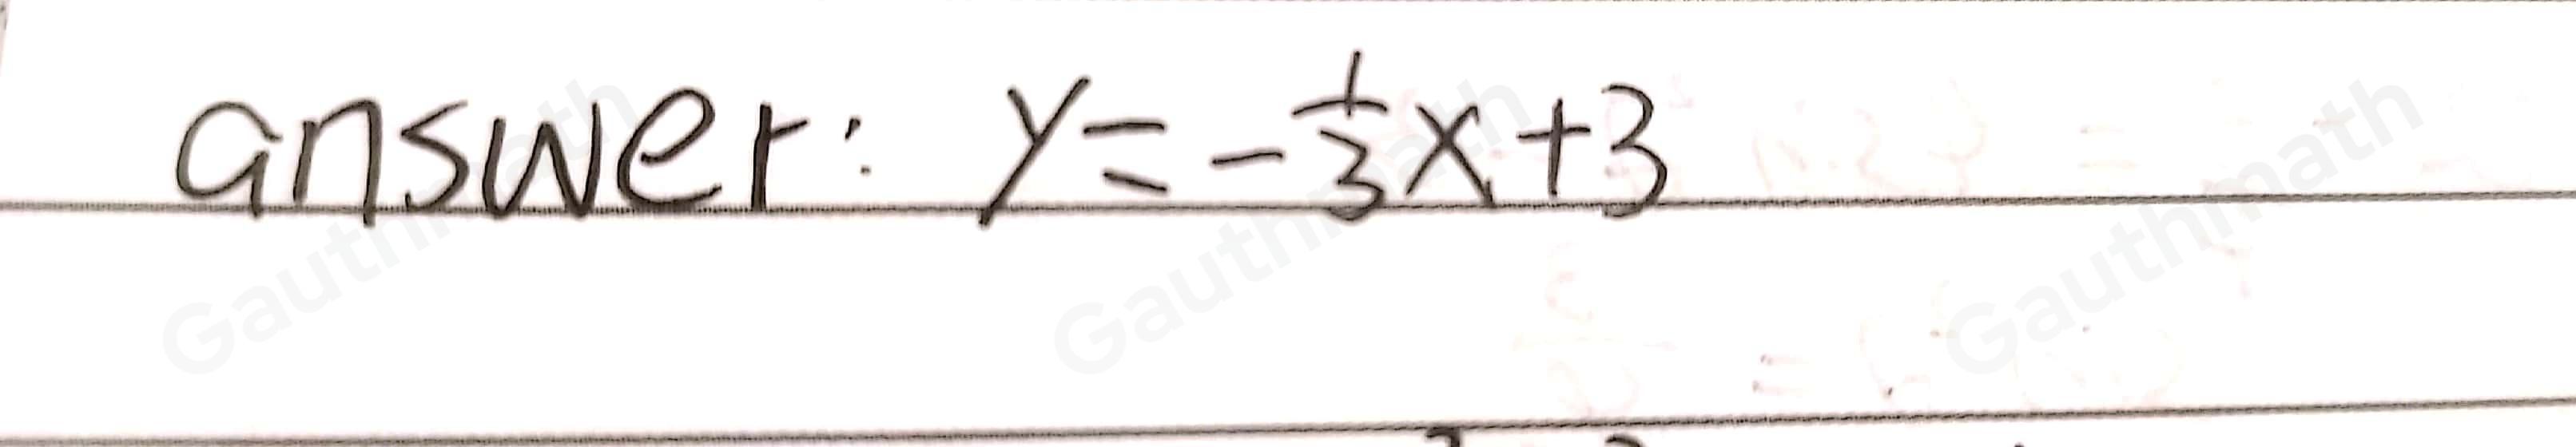 5 Which equation represents the graphed function? y=-3x+3 y=3x-3 y=3x- 1/3 y=- 1/3 x+3